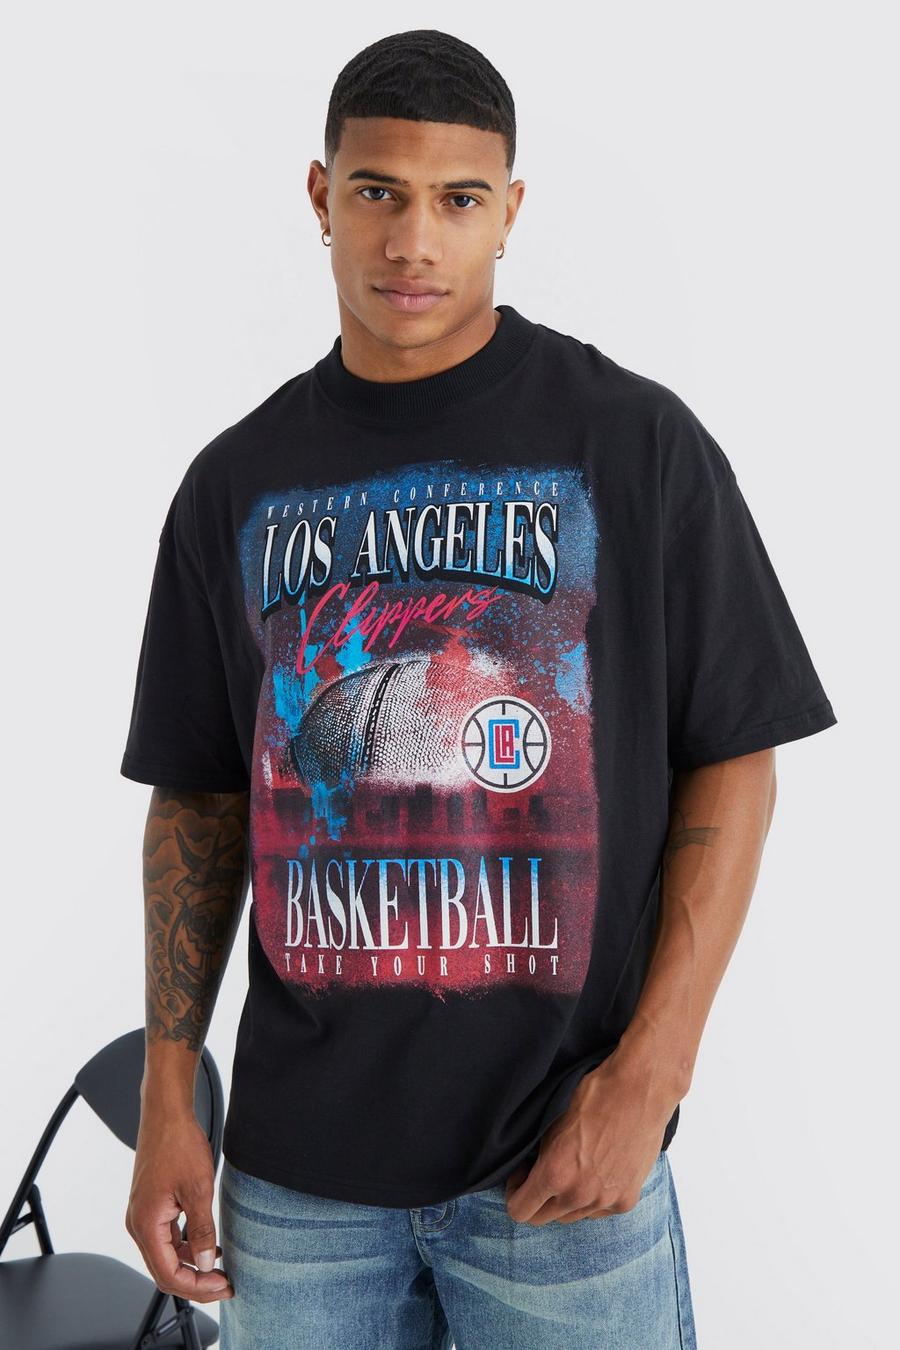 Black svart La Clippers NBA License T Shirt